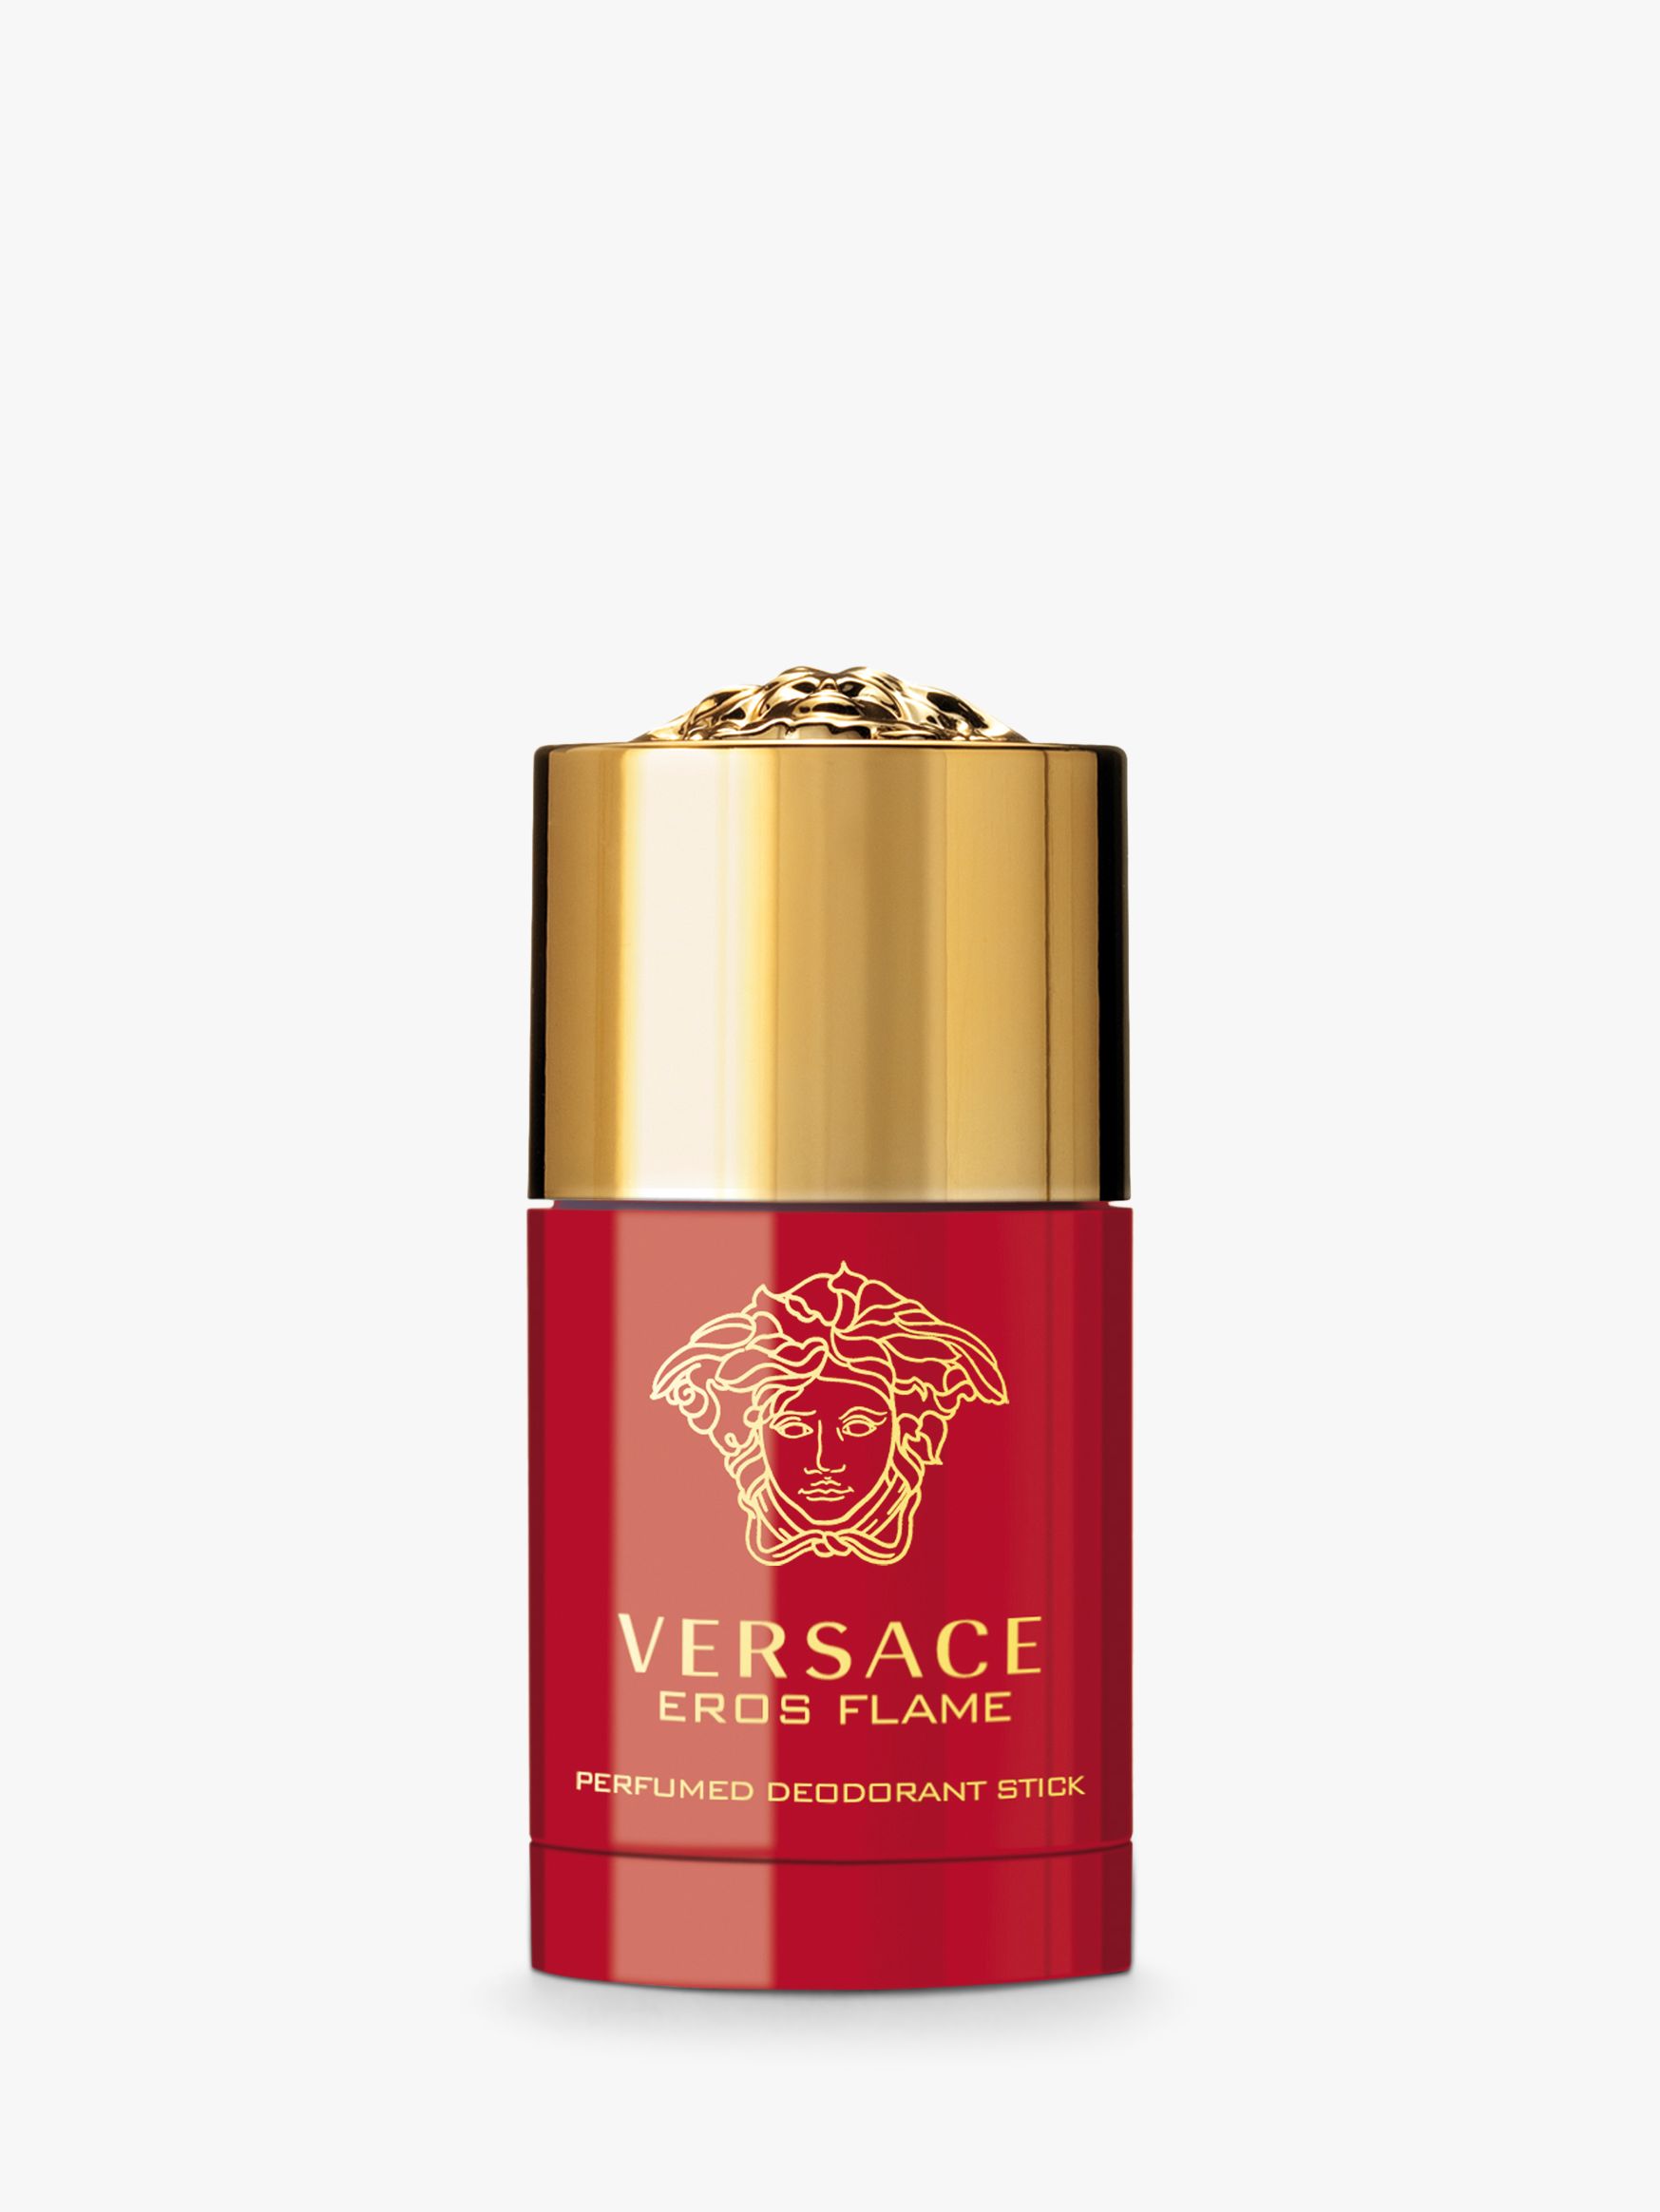 Versace Eros Flame Perfumed Deodorant 